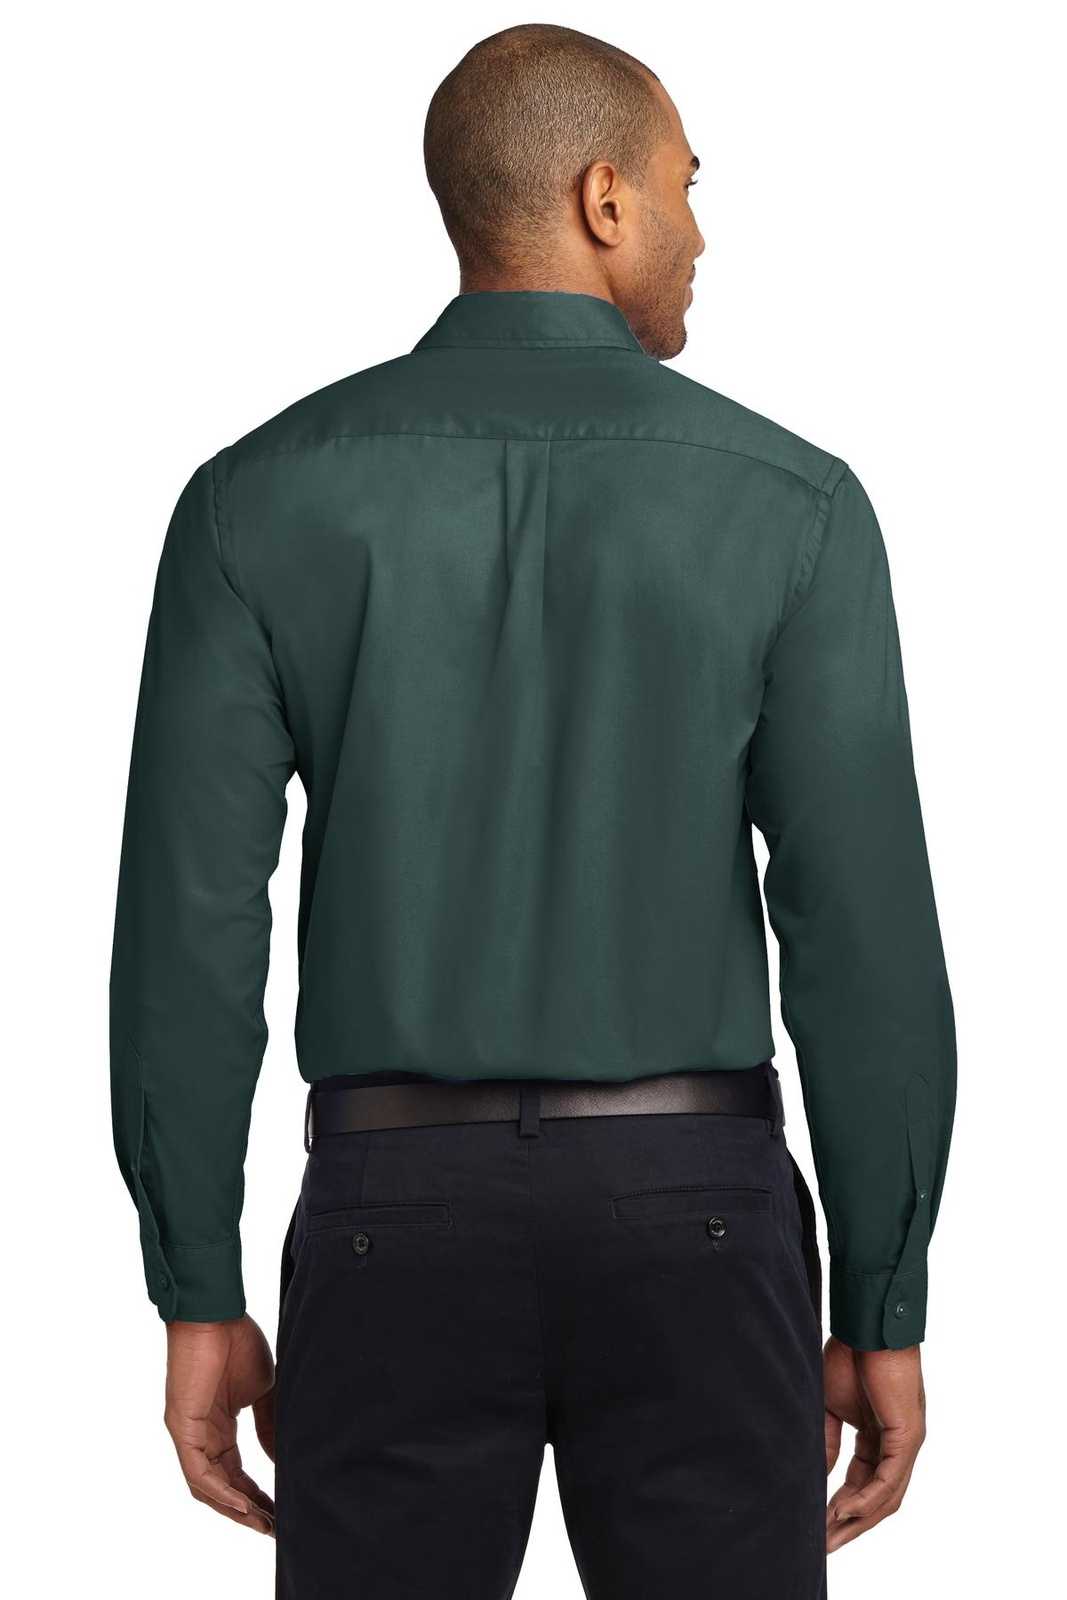 Port Authority TLS608 Tall Long Sleeve Easy Care Shirt - Dark Green Navy - HIT a Double - 2